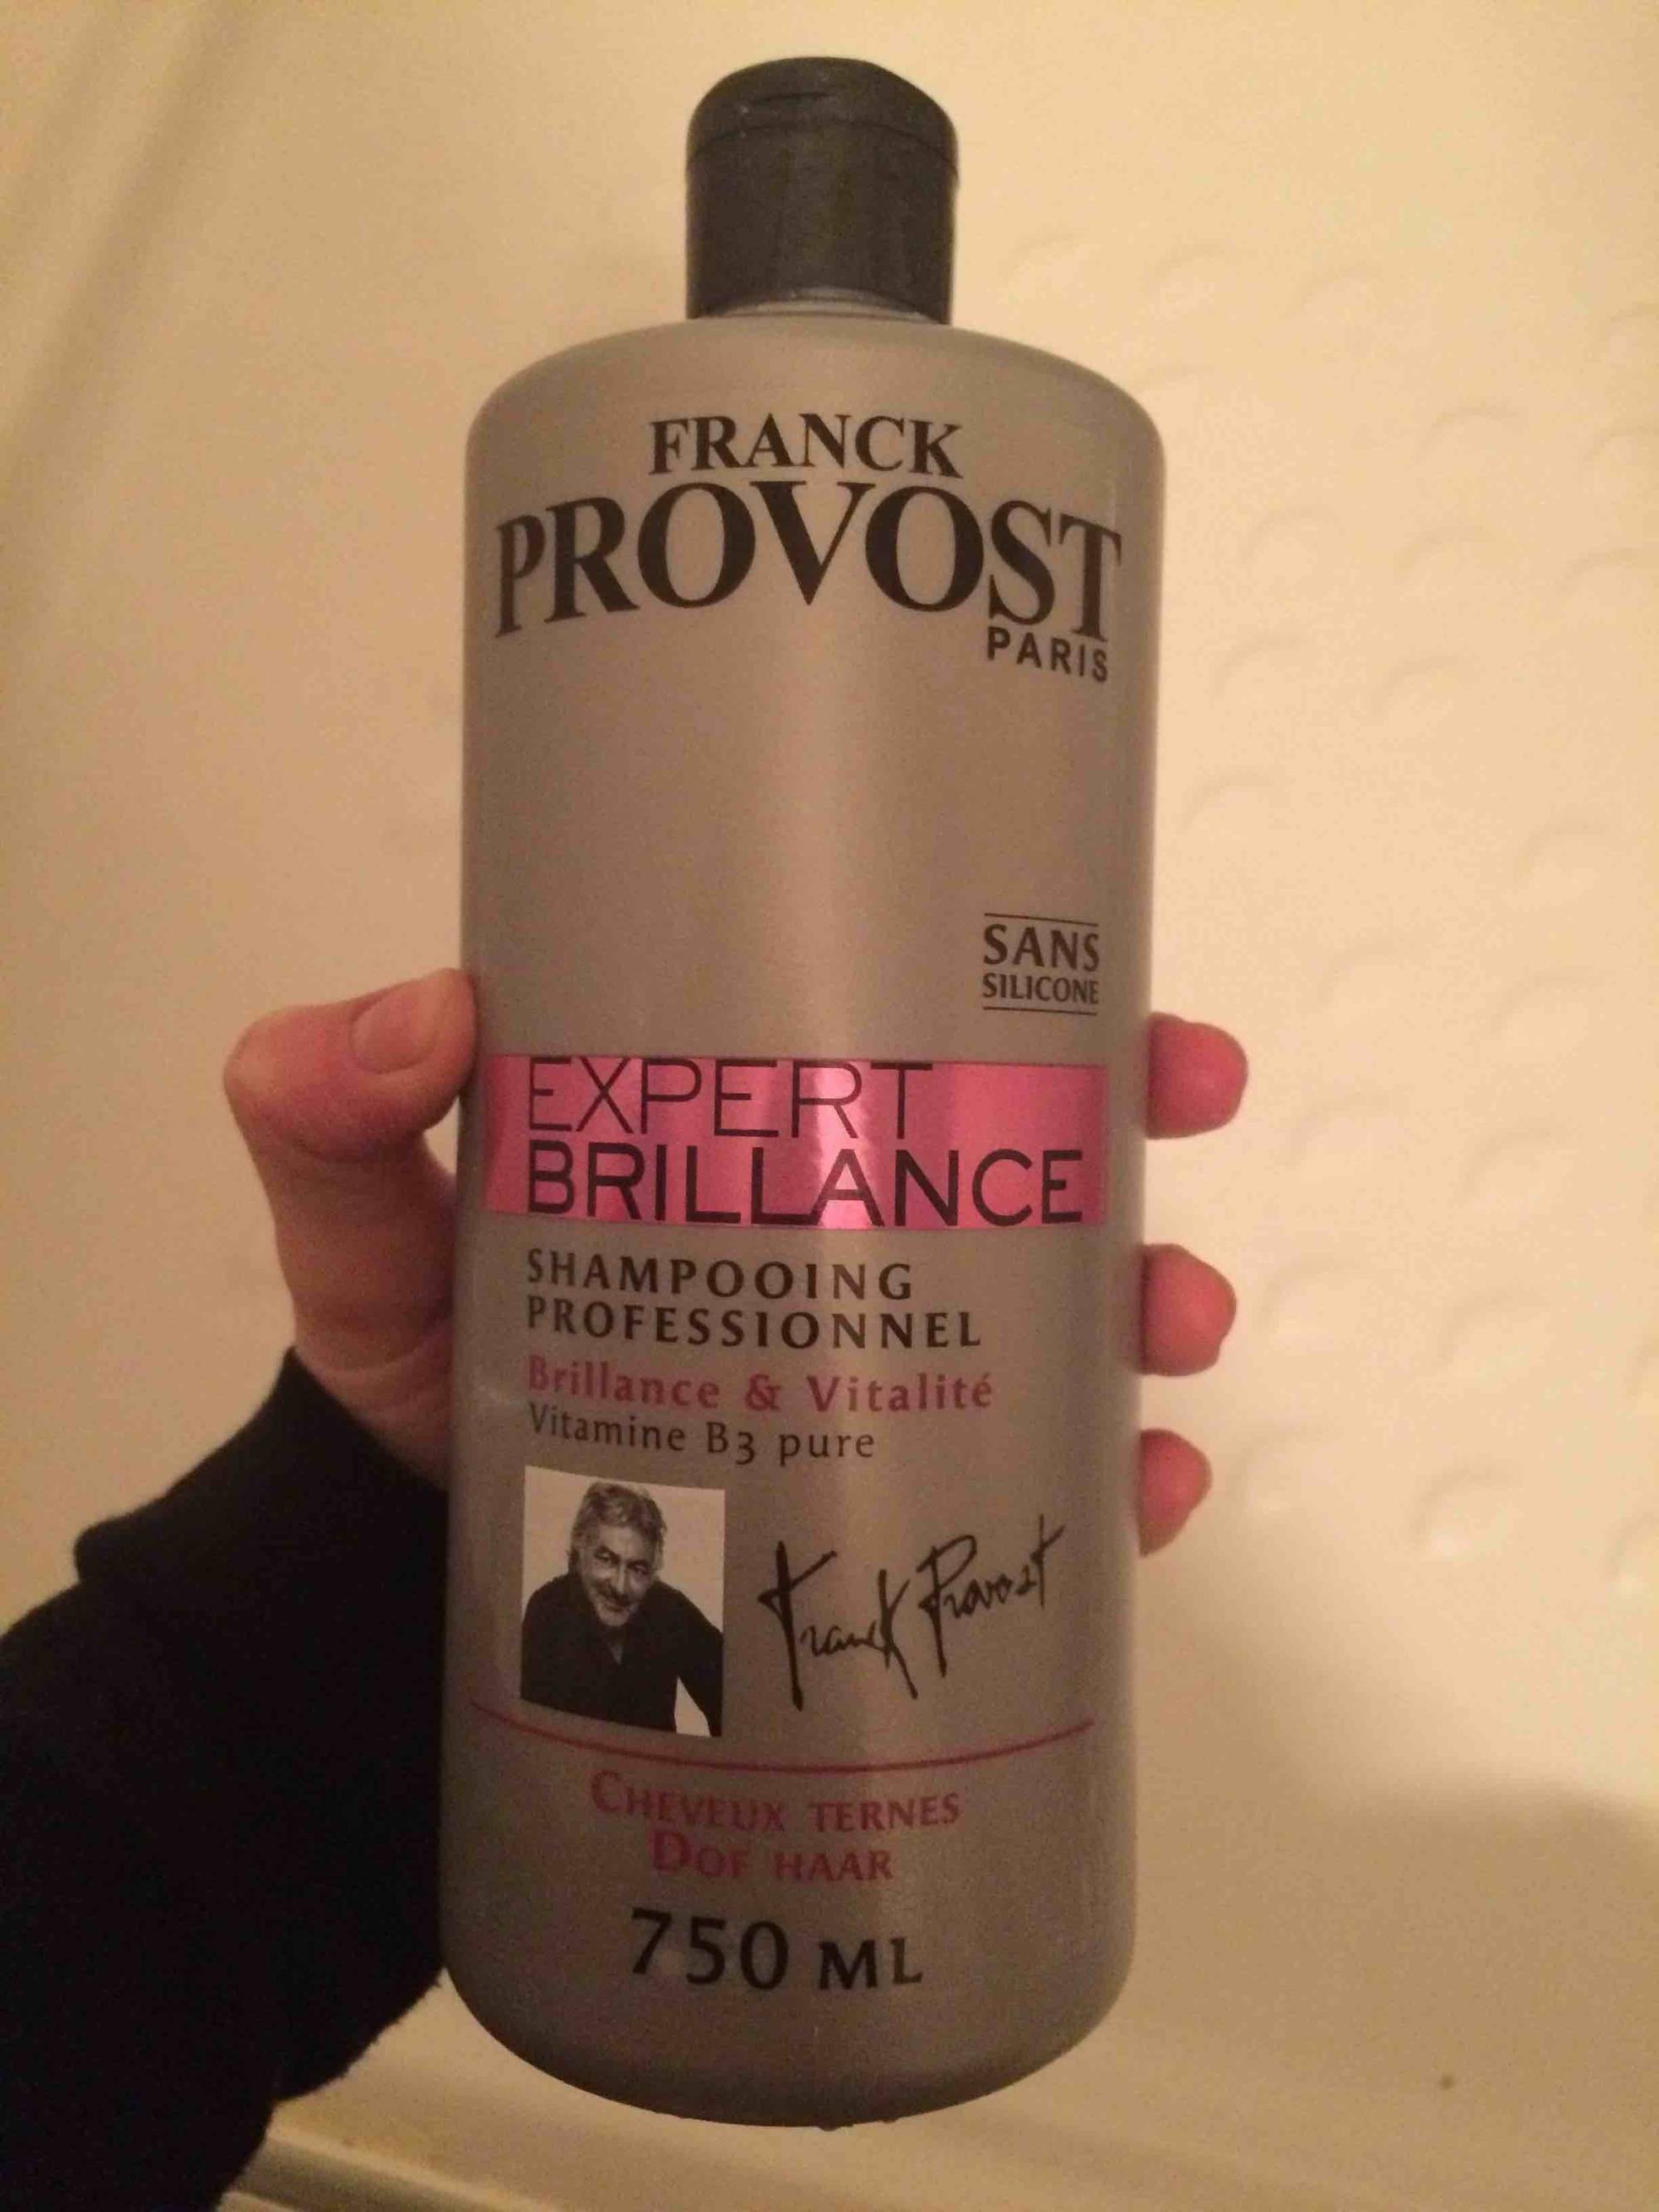 FRANCK PROVOST - Expert brillance - Shampooing professionnel